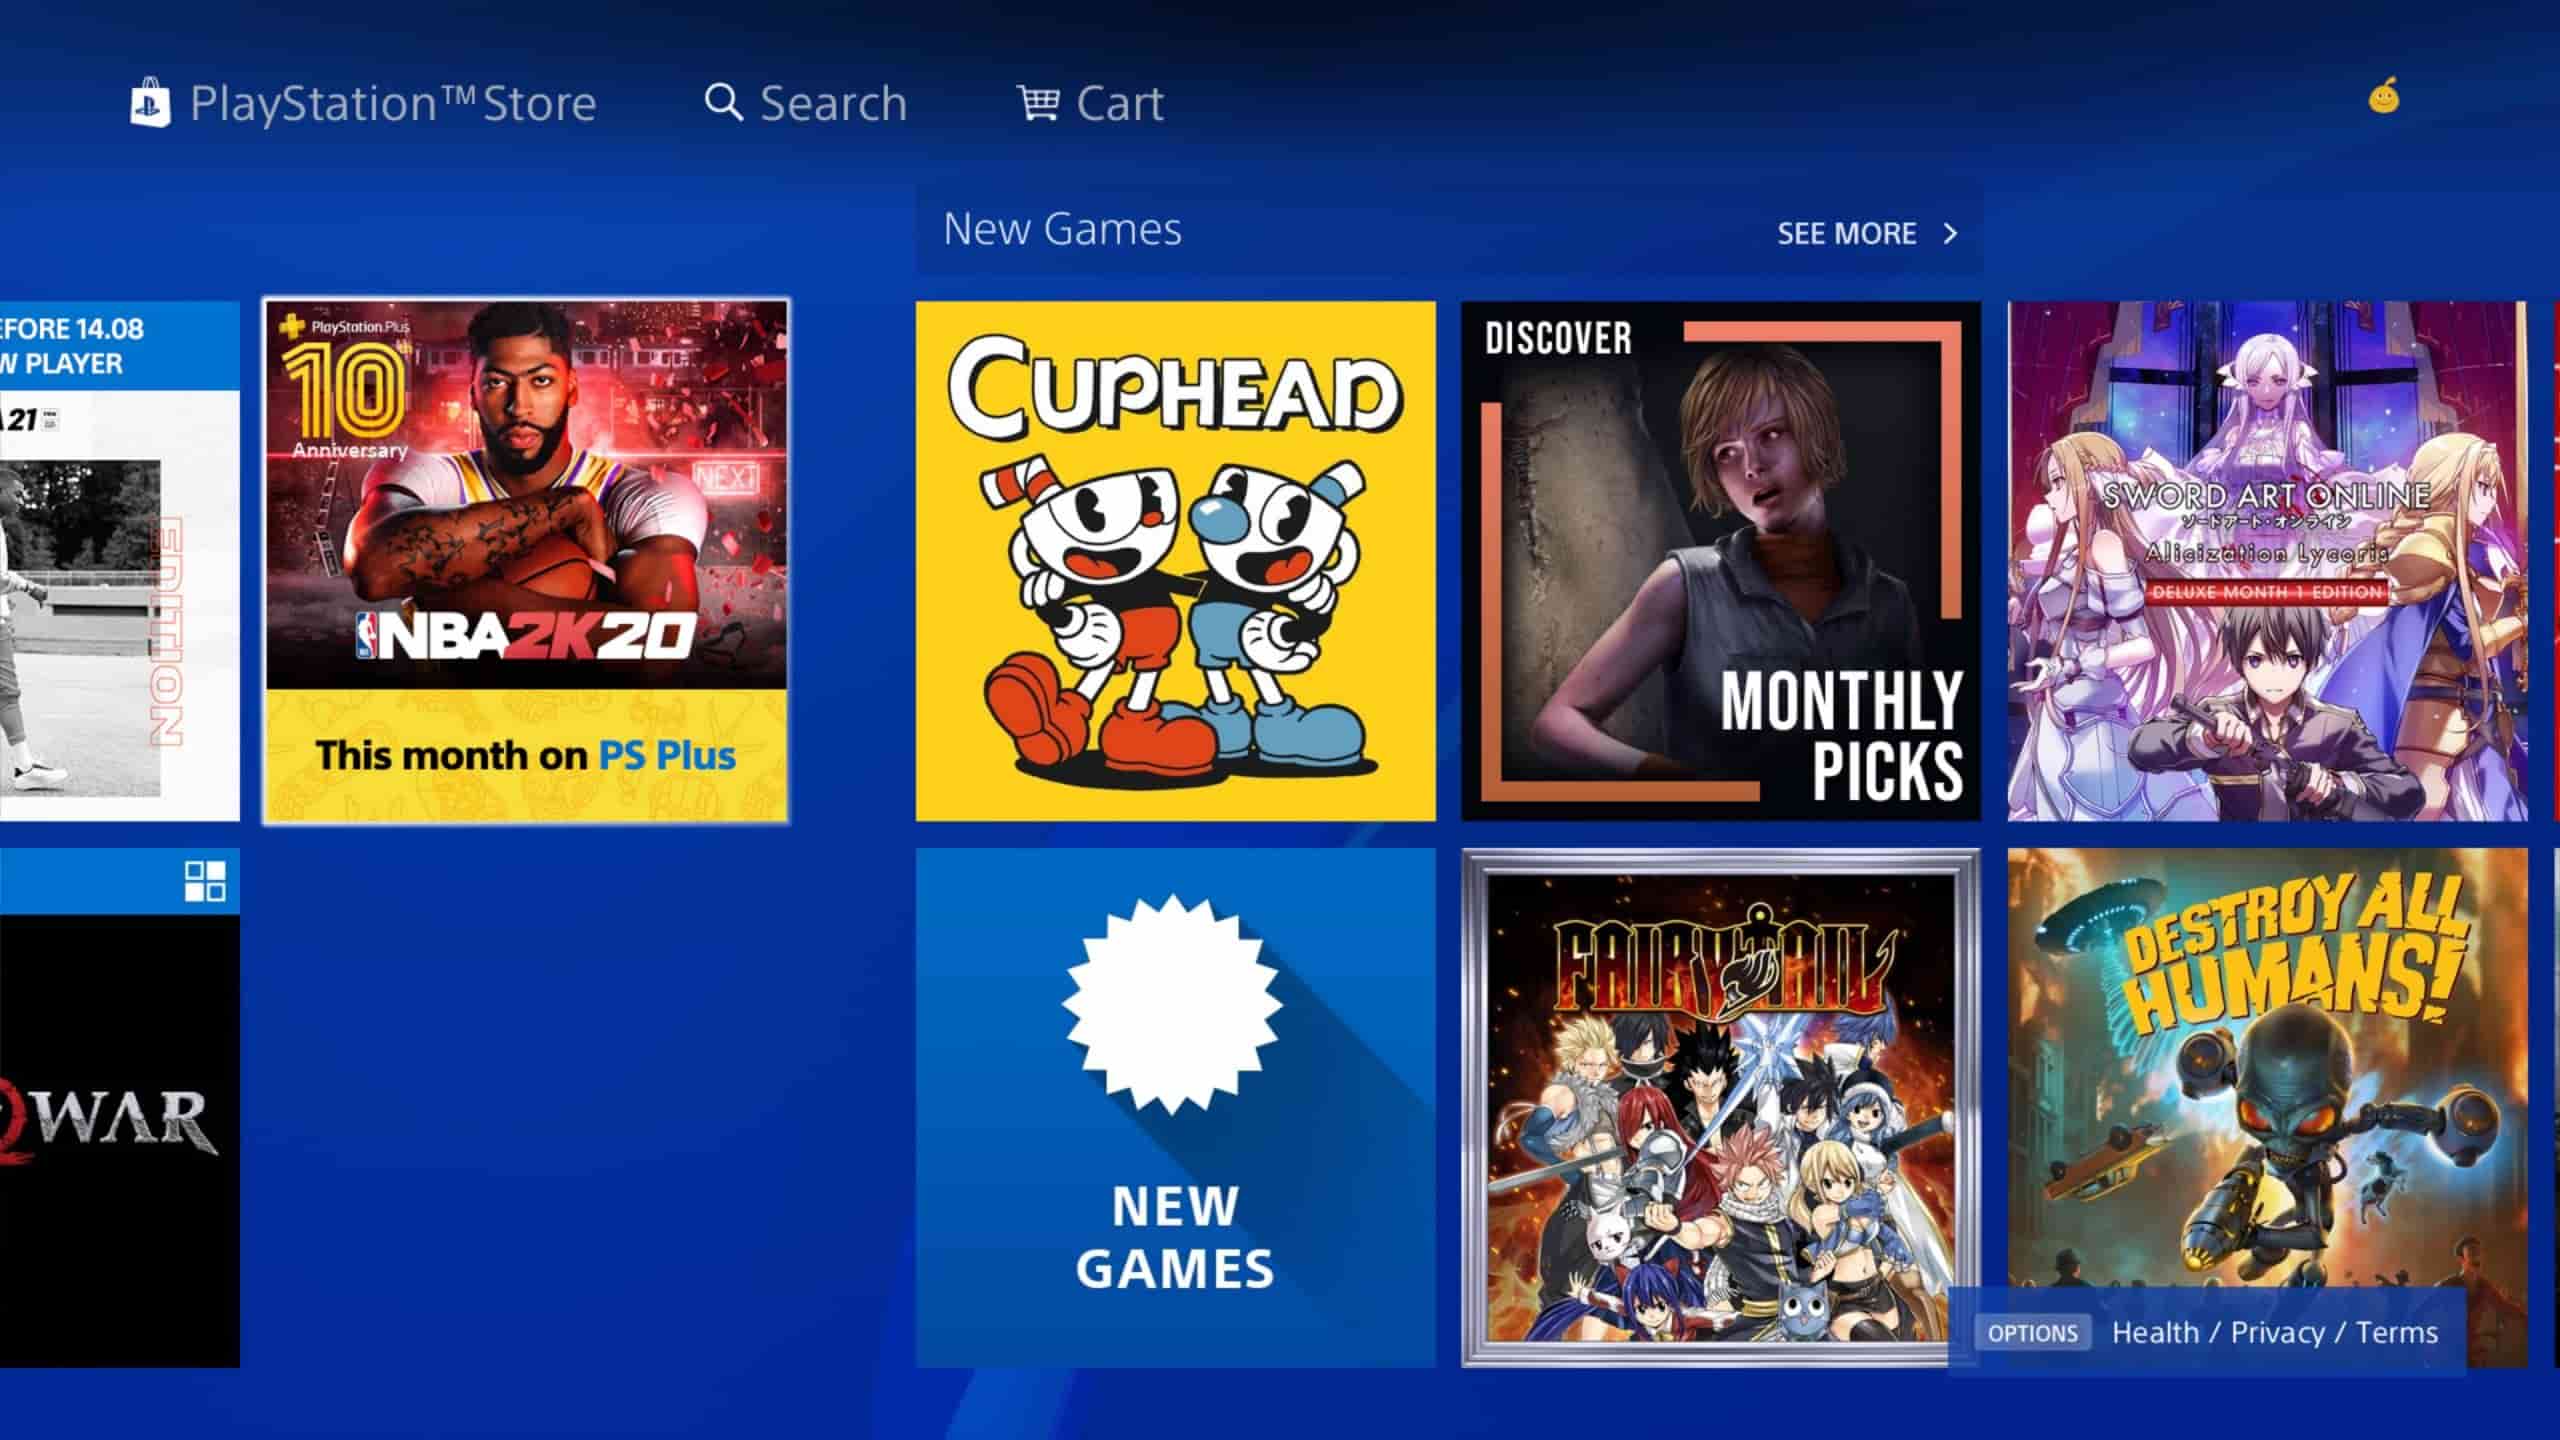 Cuphead potrebbe arrivare su PlayStation 4